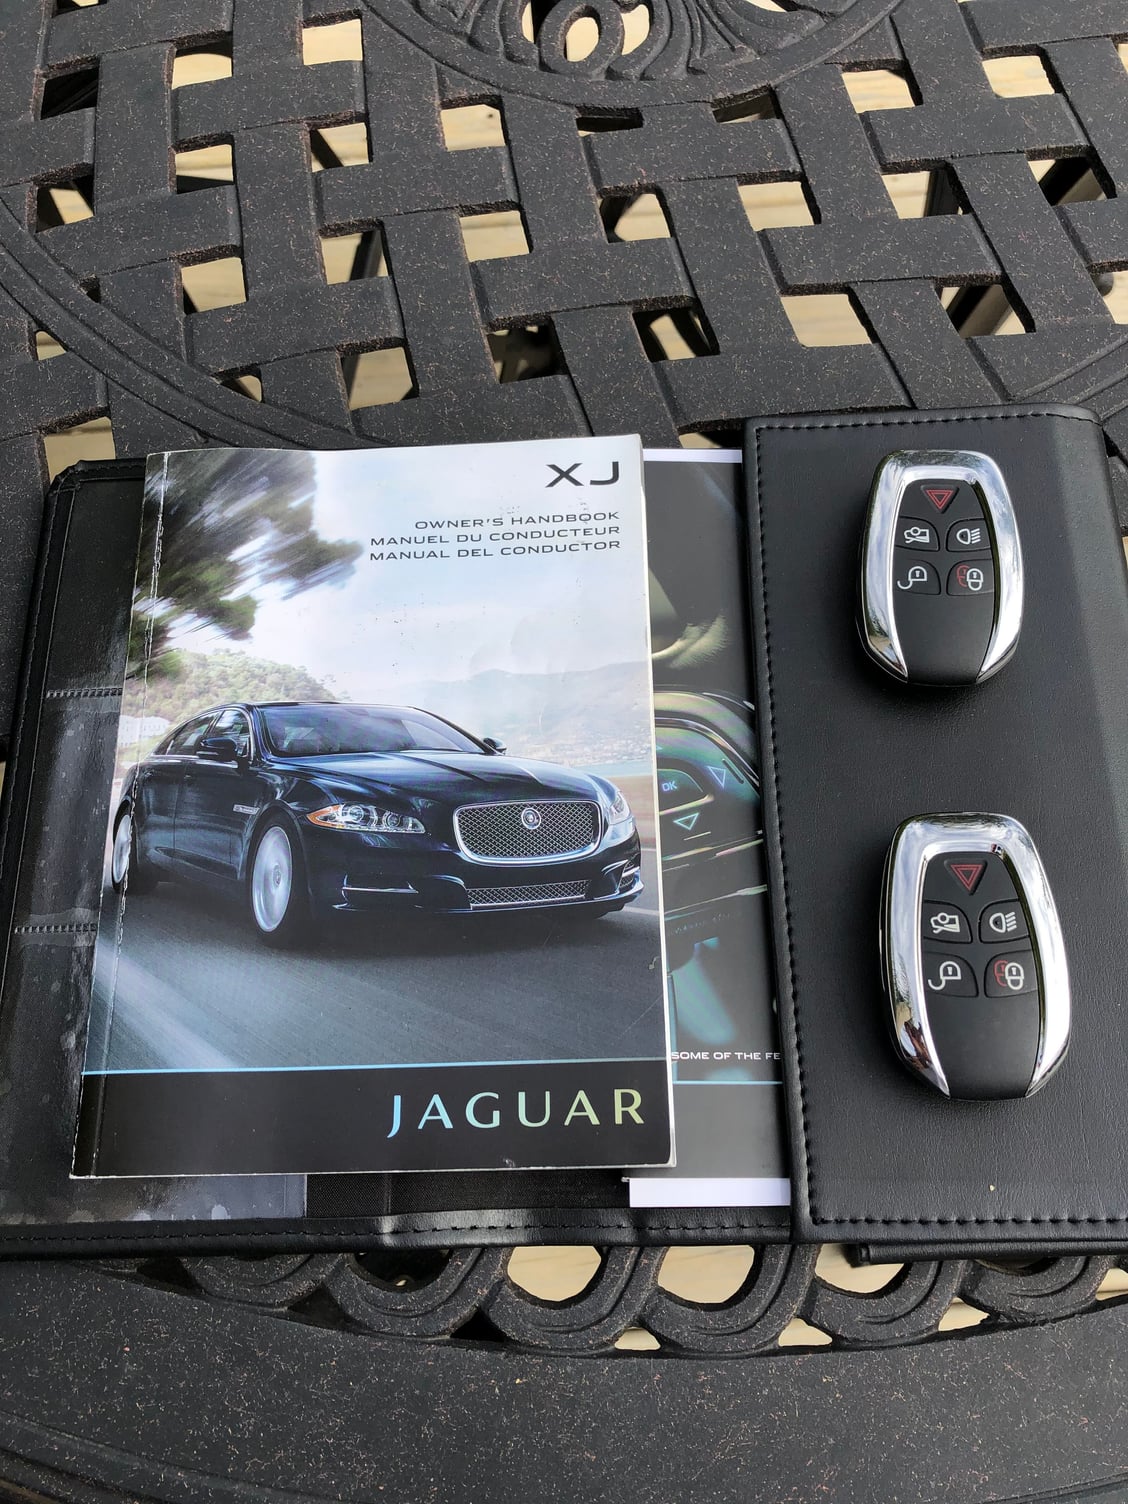 2012 Jaguar XJ - 2012 Jaguar XJL with warranty for sale - Used - VIN SAJWA3KE6CMV38461 - 8 cyl - 2WD - Automatic - Sedan - White - Houston, TX 77581, United States